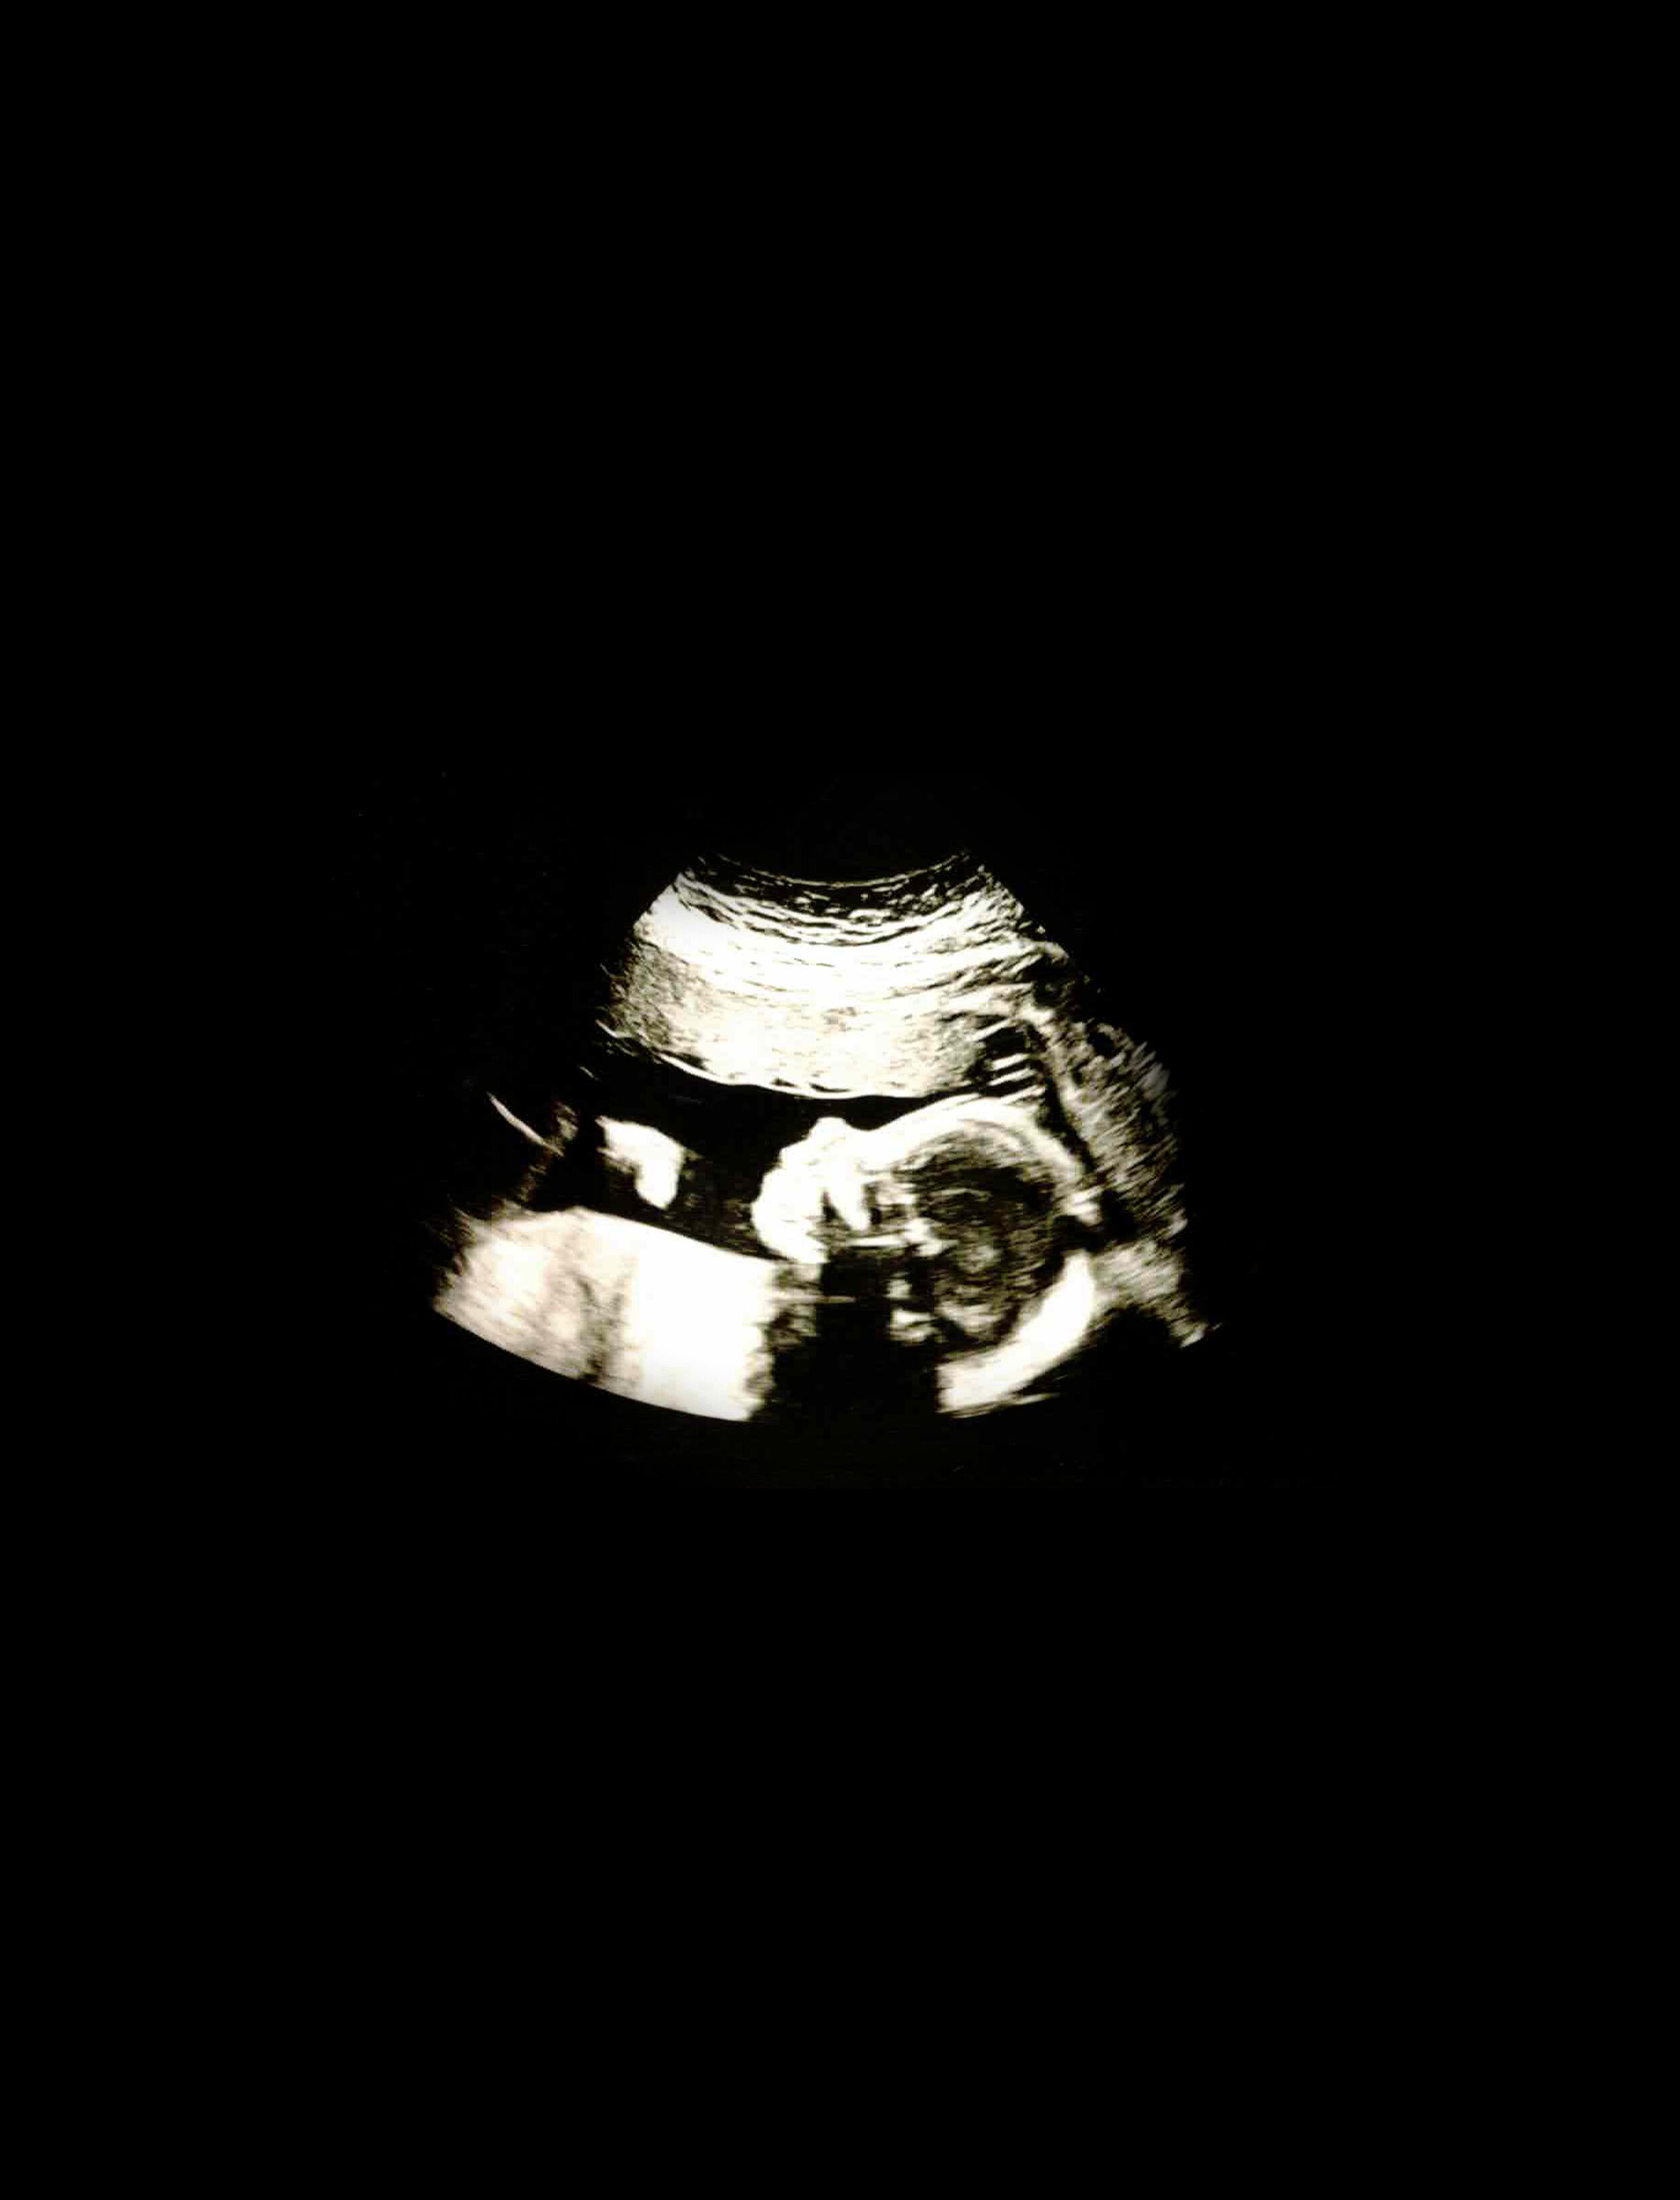 moc-5-ultrasound-2.jpg